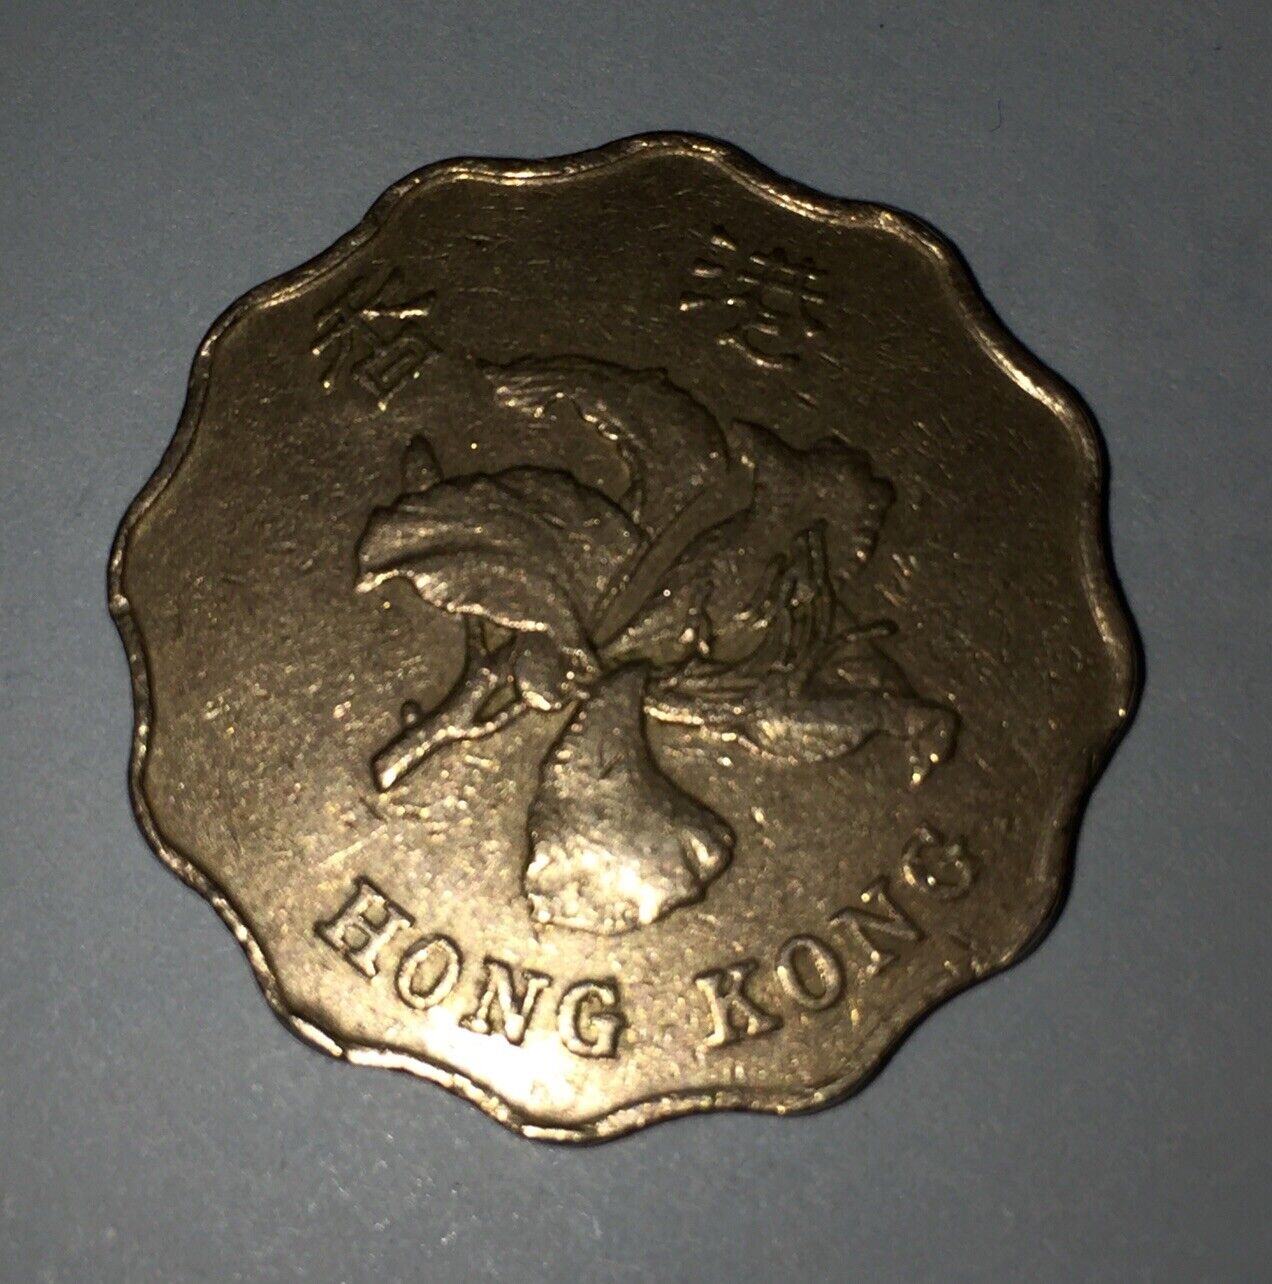 Hong Kong 1993 - 2 Dollars Copper-Nickel Coin - Bauhinia flower - Scalloped